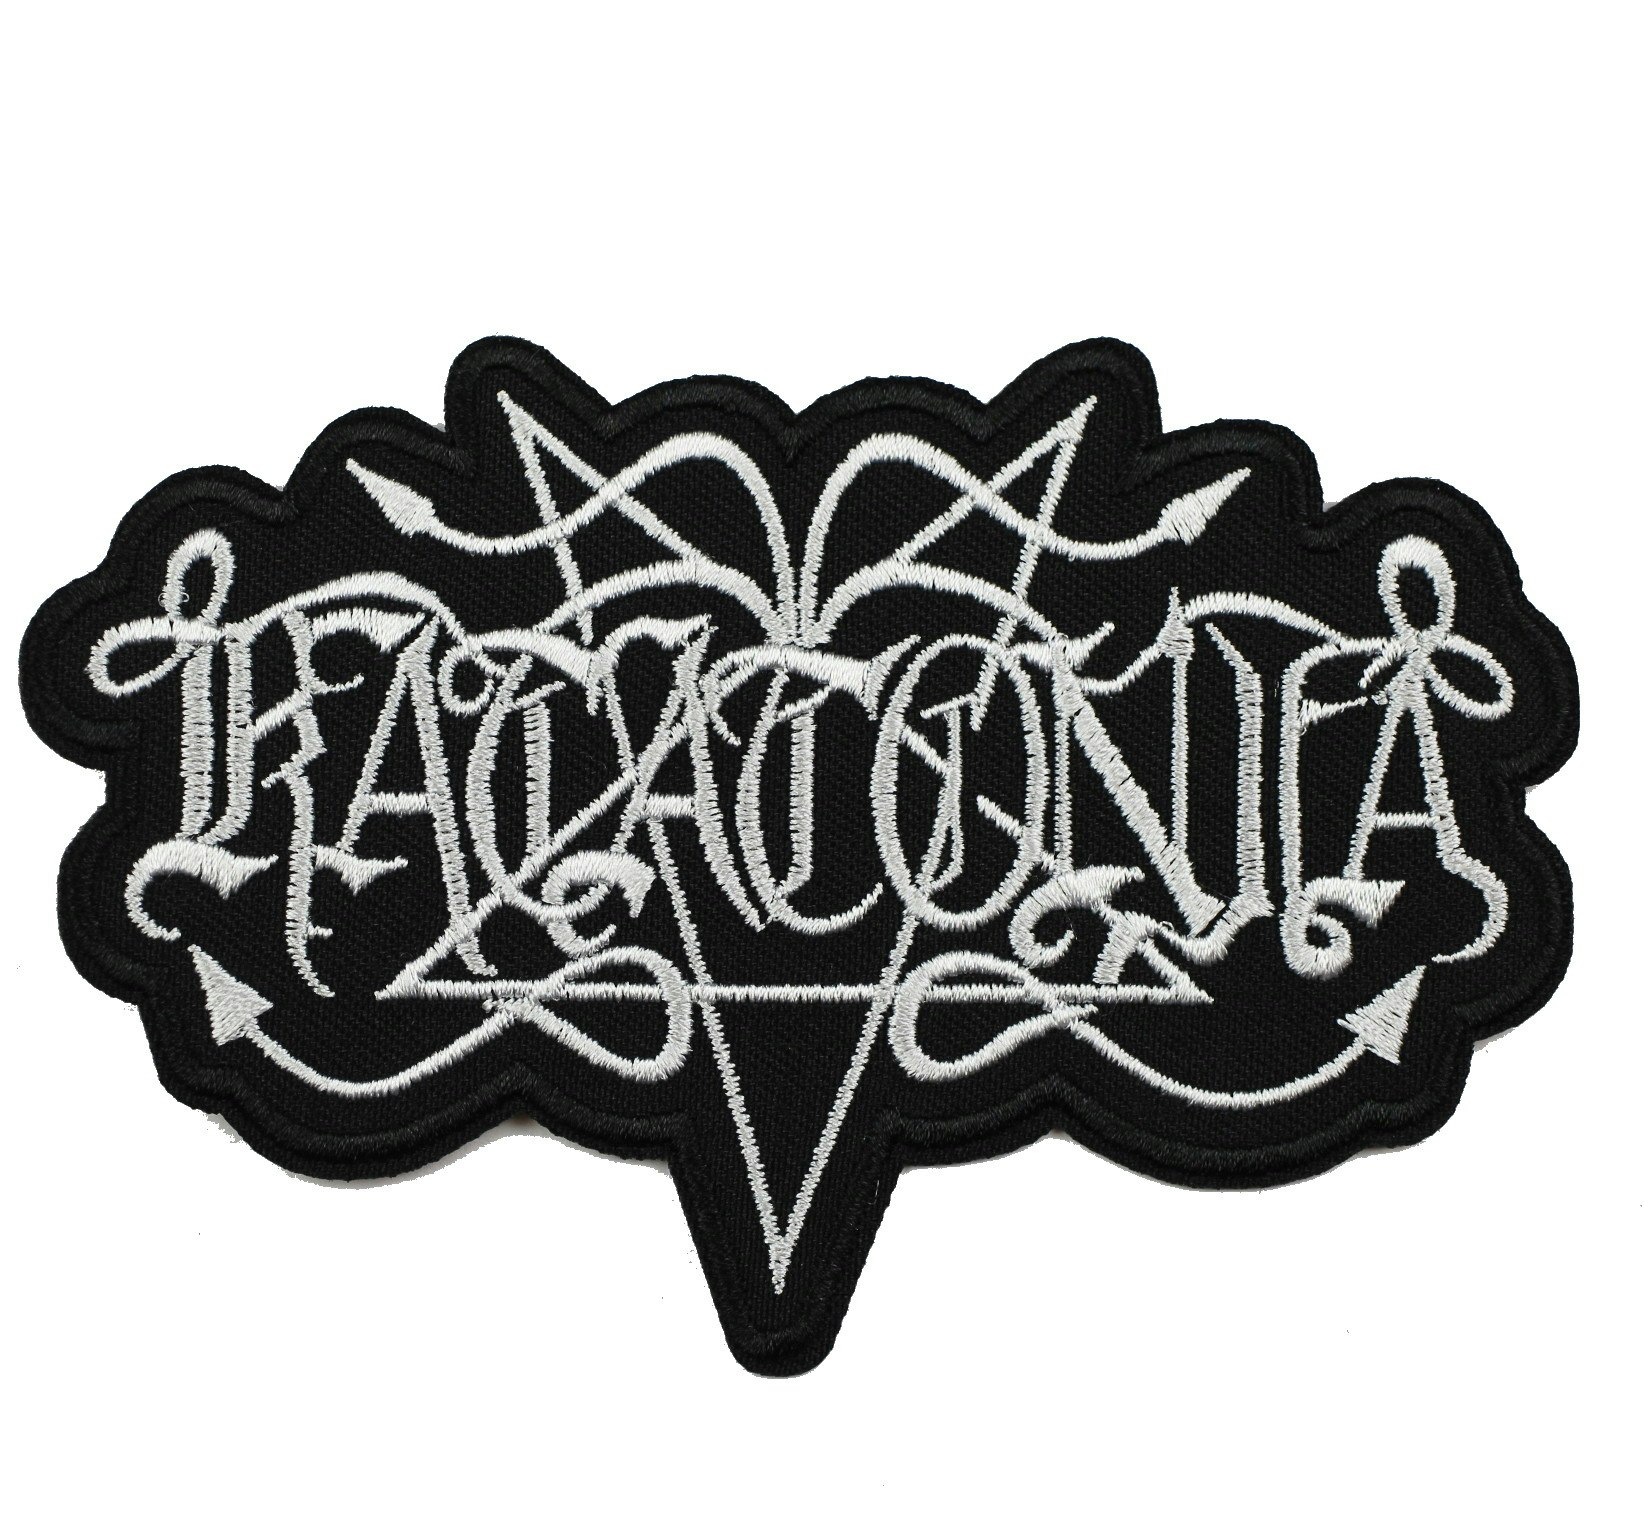 Katatonia logo patch